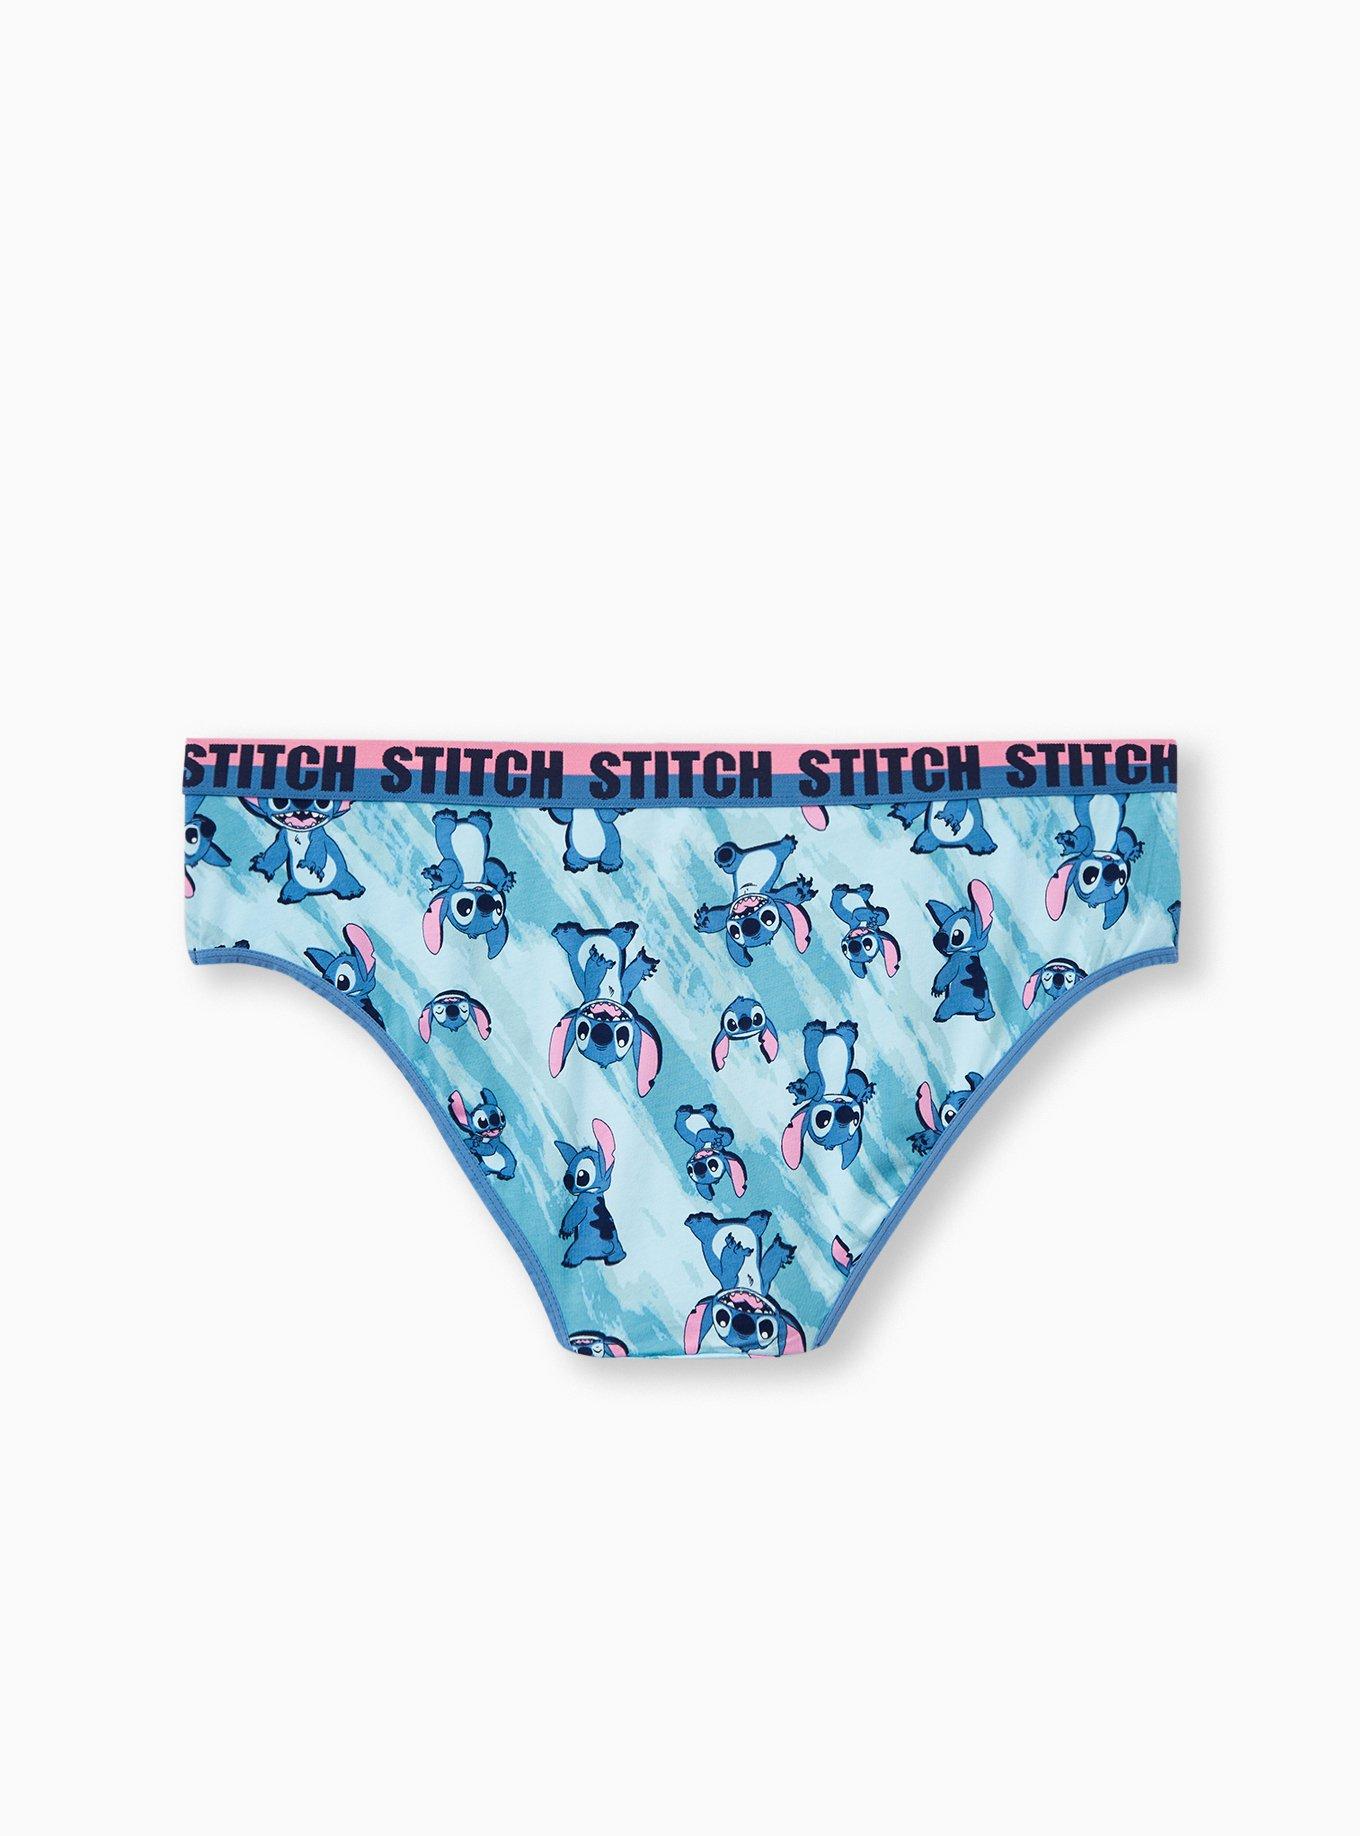 Plus Size - Disney Lilo & Stitch Cotton Hipster Panty - Torrid